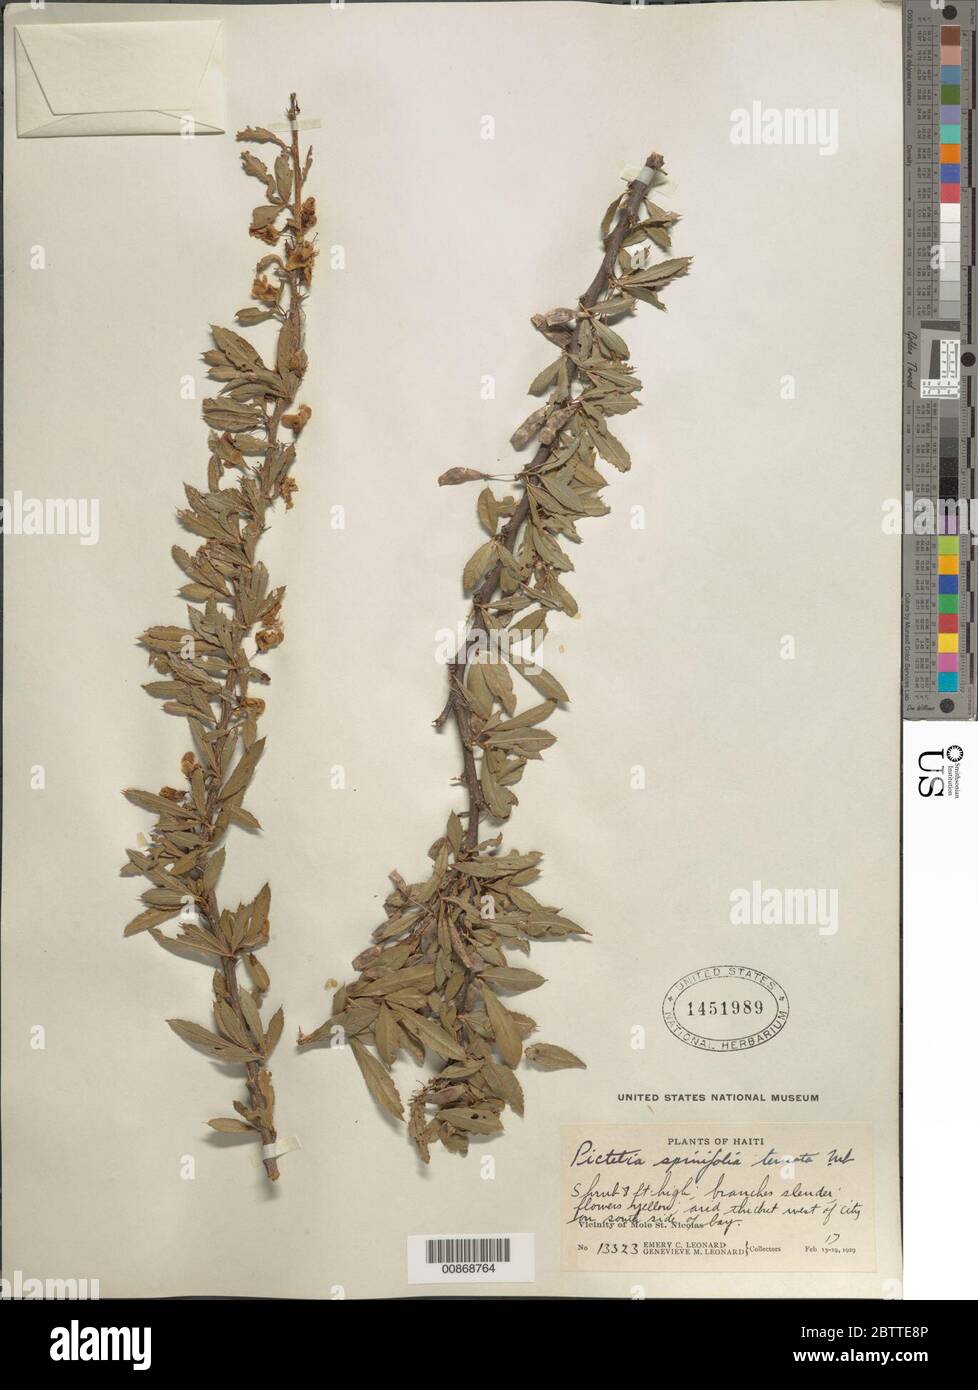 Pictetia spinifolia var ternata Spreng ex DC Urb. Stock Photo